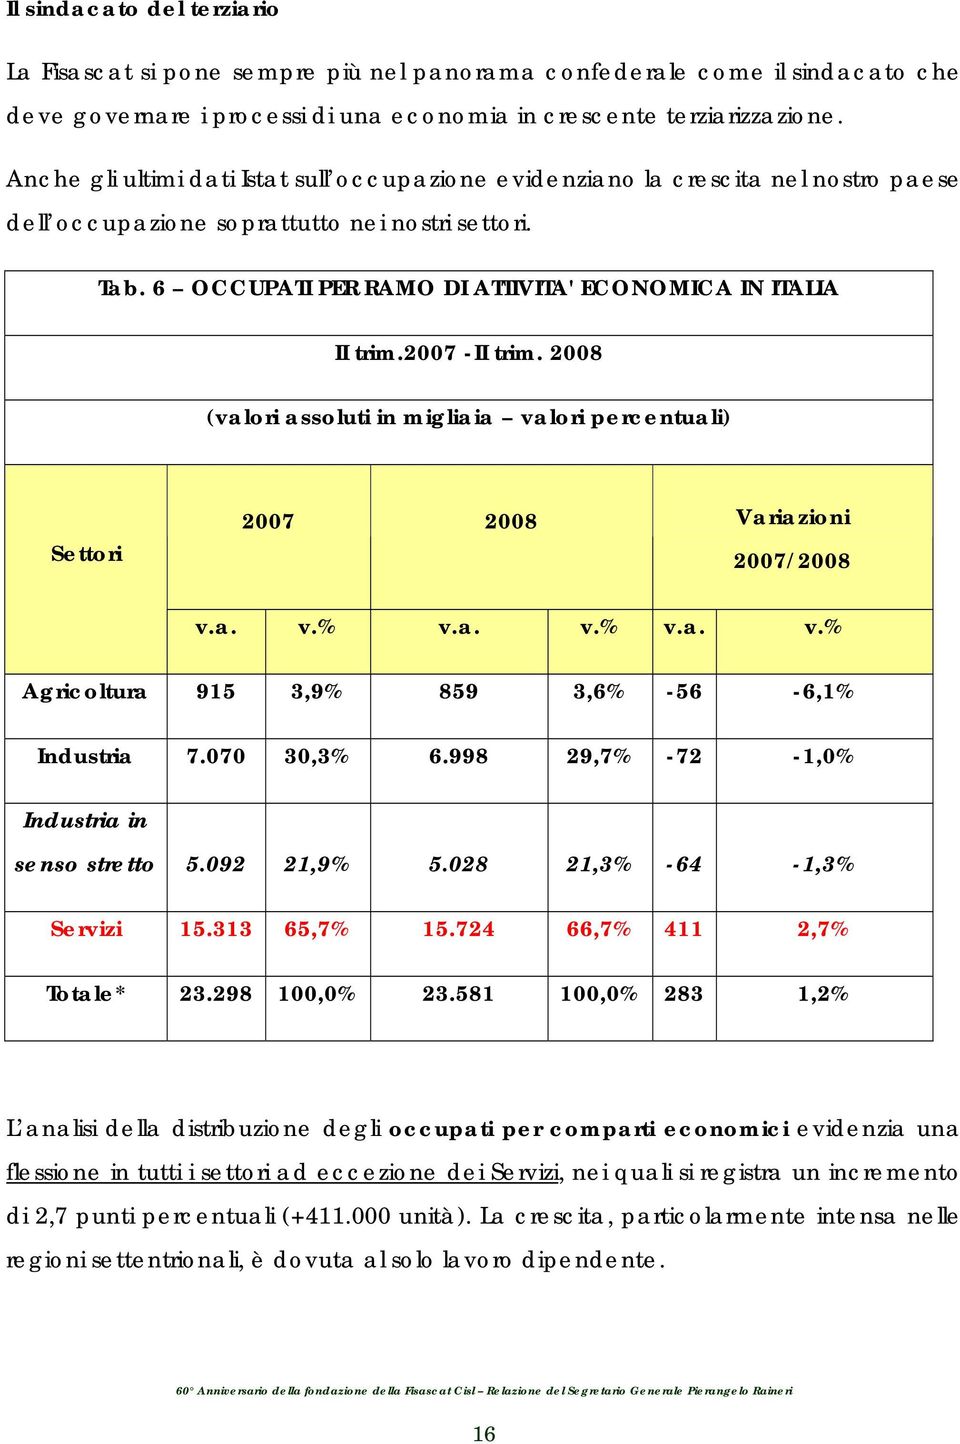 6 OCCUPATI PER RAMO DI ATTIVITA' ECONOMICA IN ITALIA II trim.2007 -II trim. 2008 (valori assoluti in migliaia valori percentuali) Settori 2007 2008 Variazioni 2007/2008 v.a. v.% v.a. v.% v.a. v.% Agricoltura 915 3,9% 859 3,6% -56-6,1% Industria 7.